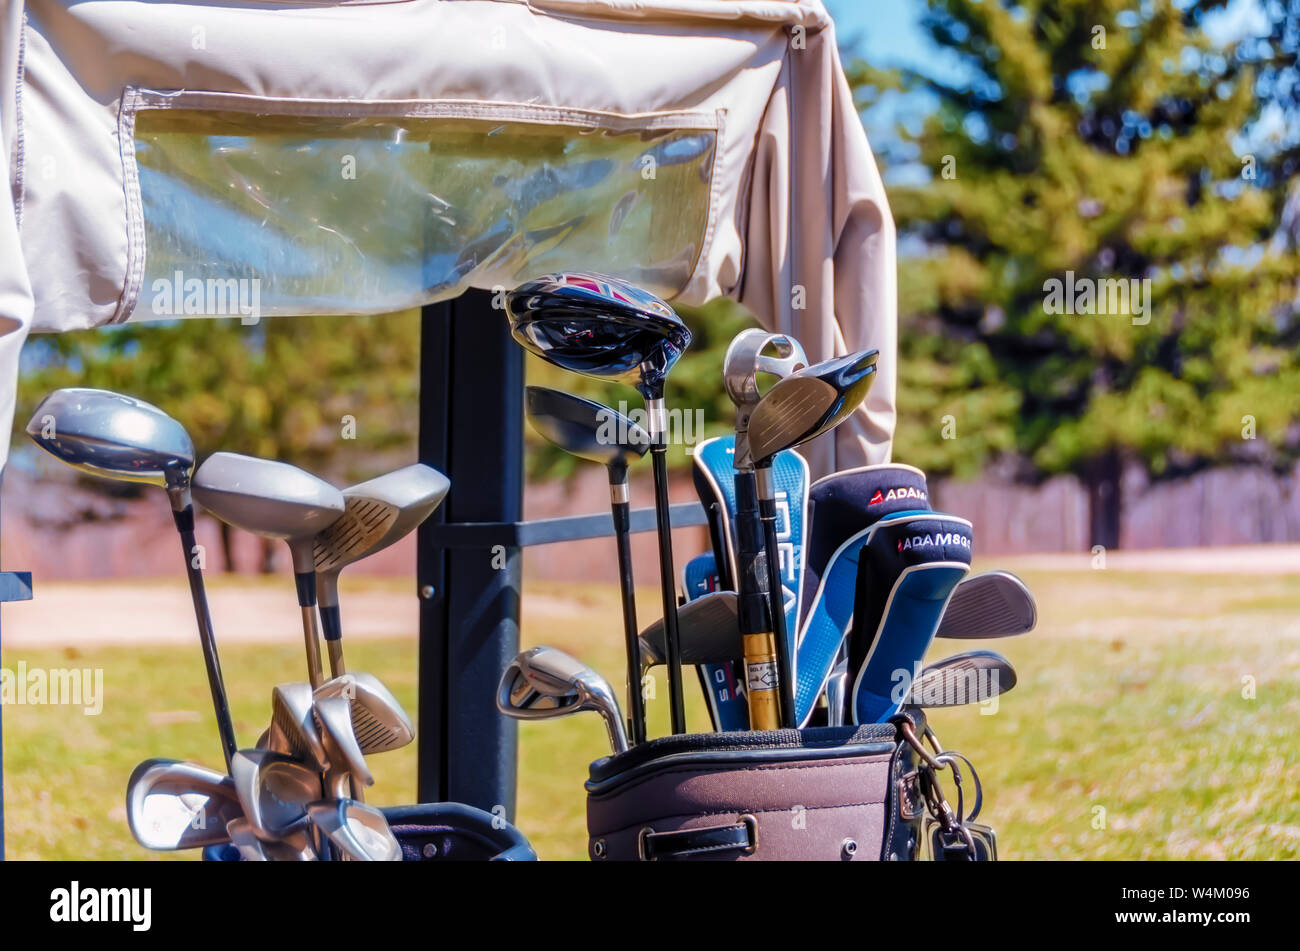 Golf clubs--drivers, irons, hybrids, wedges, golf ball retriever--in golf cart bags. Stock Photo